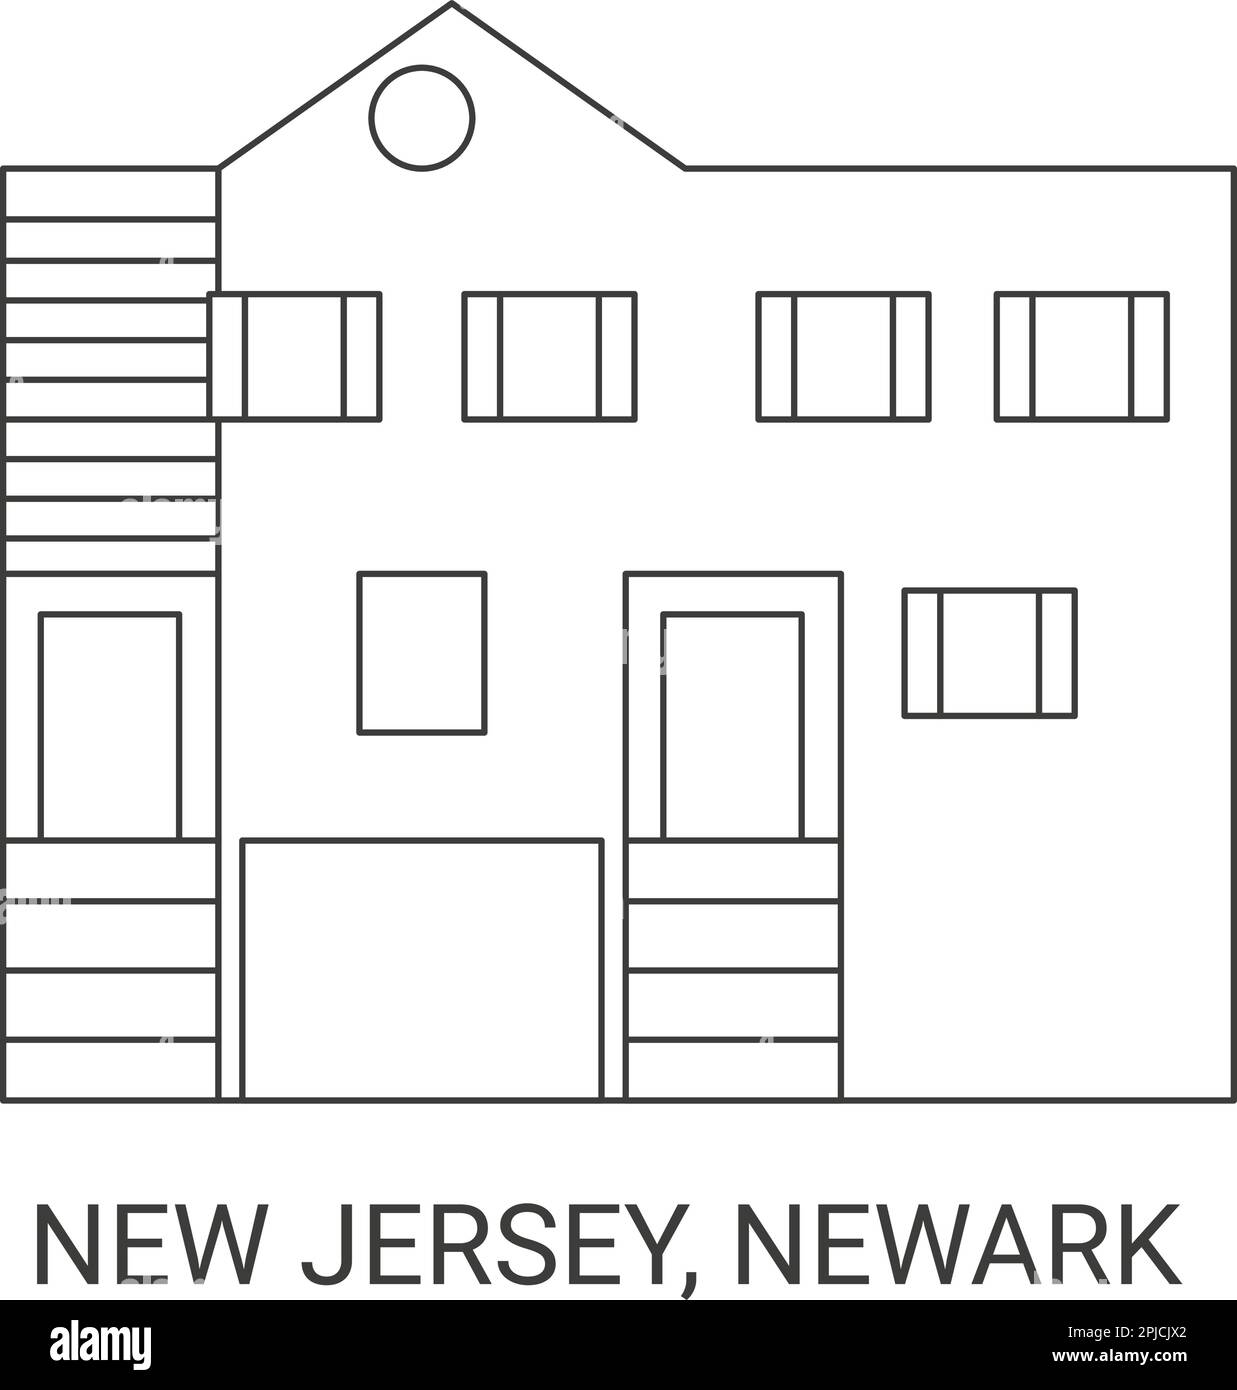 United States, New Jersey, Newark travel landmark vector illustration Stock Vector